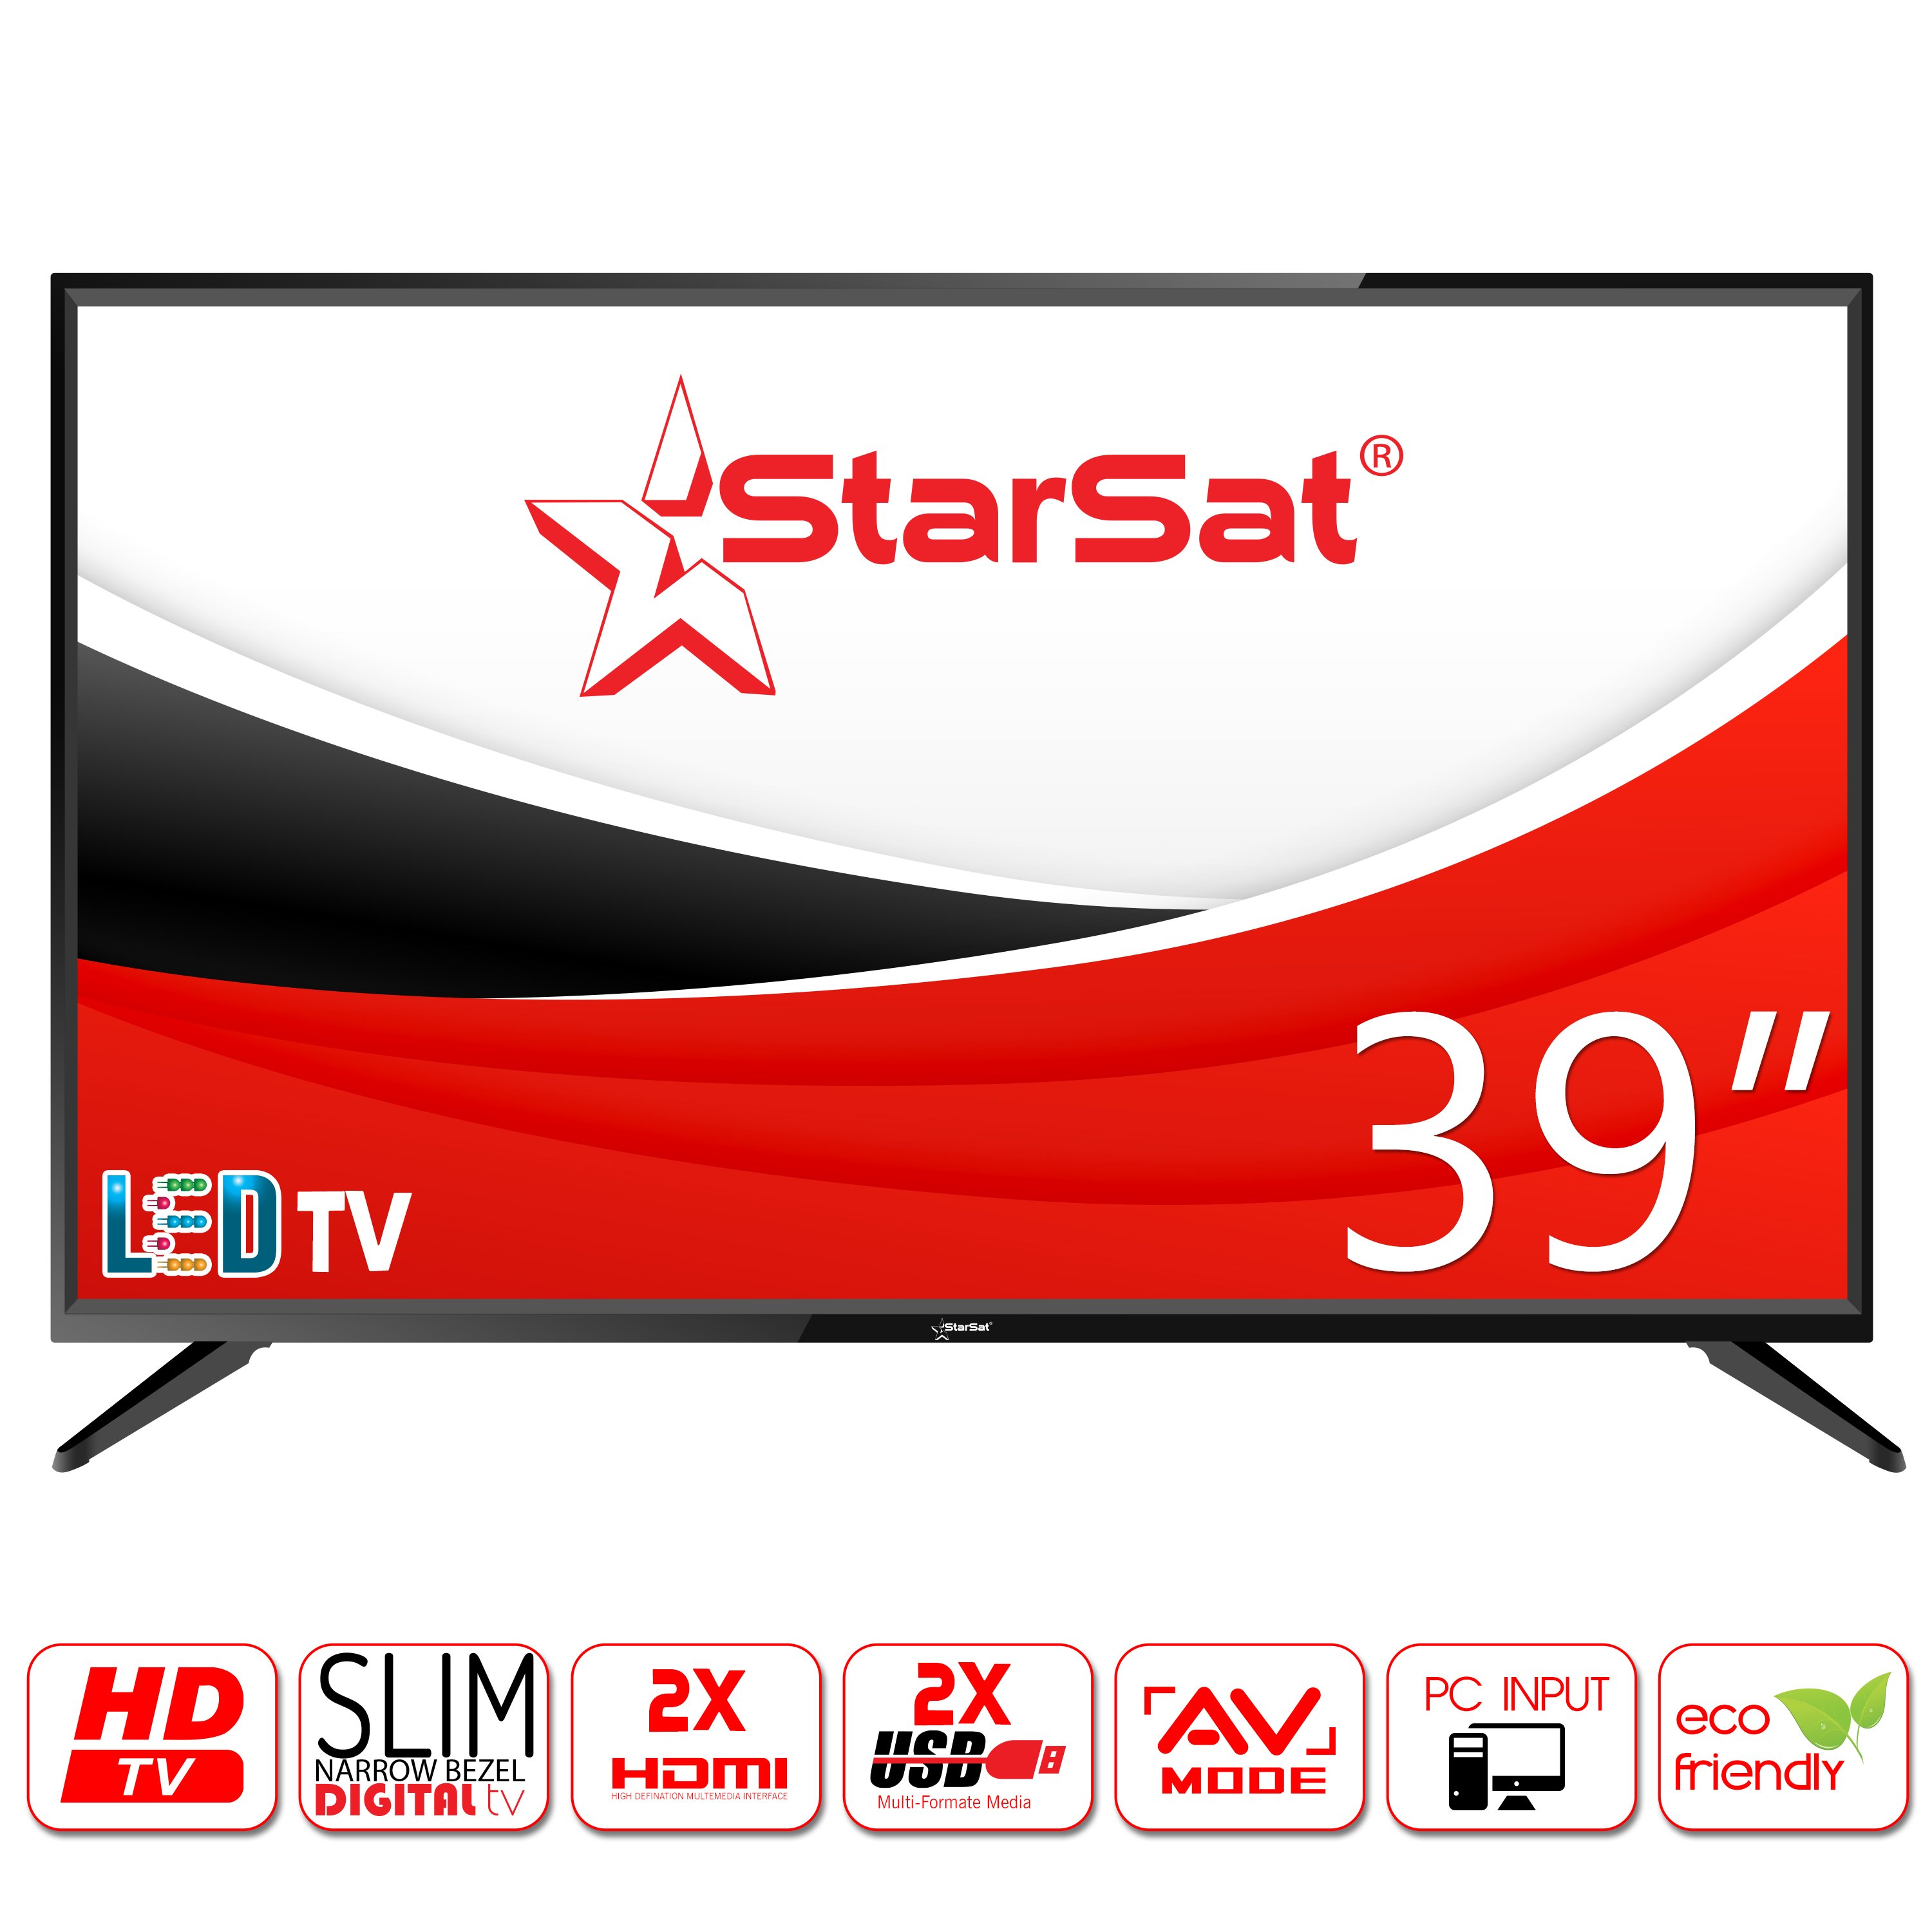 StarSat 39" HD Smart LED TV, Slim bezel design, 2xHDMI and 2xUSB Ports, Android 5, WiFi, Smart Cast, PlayStore, AV and PC mode